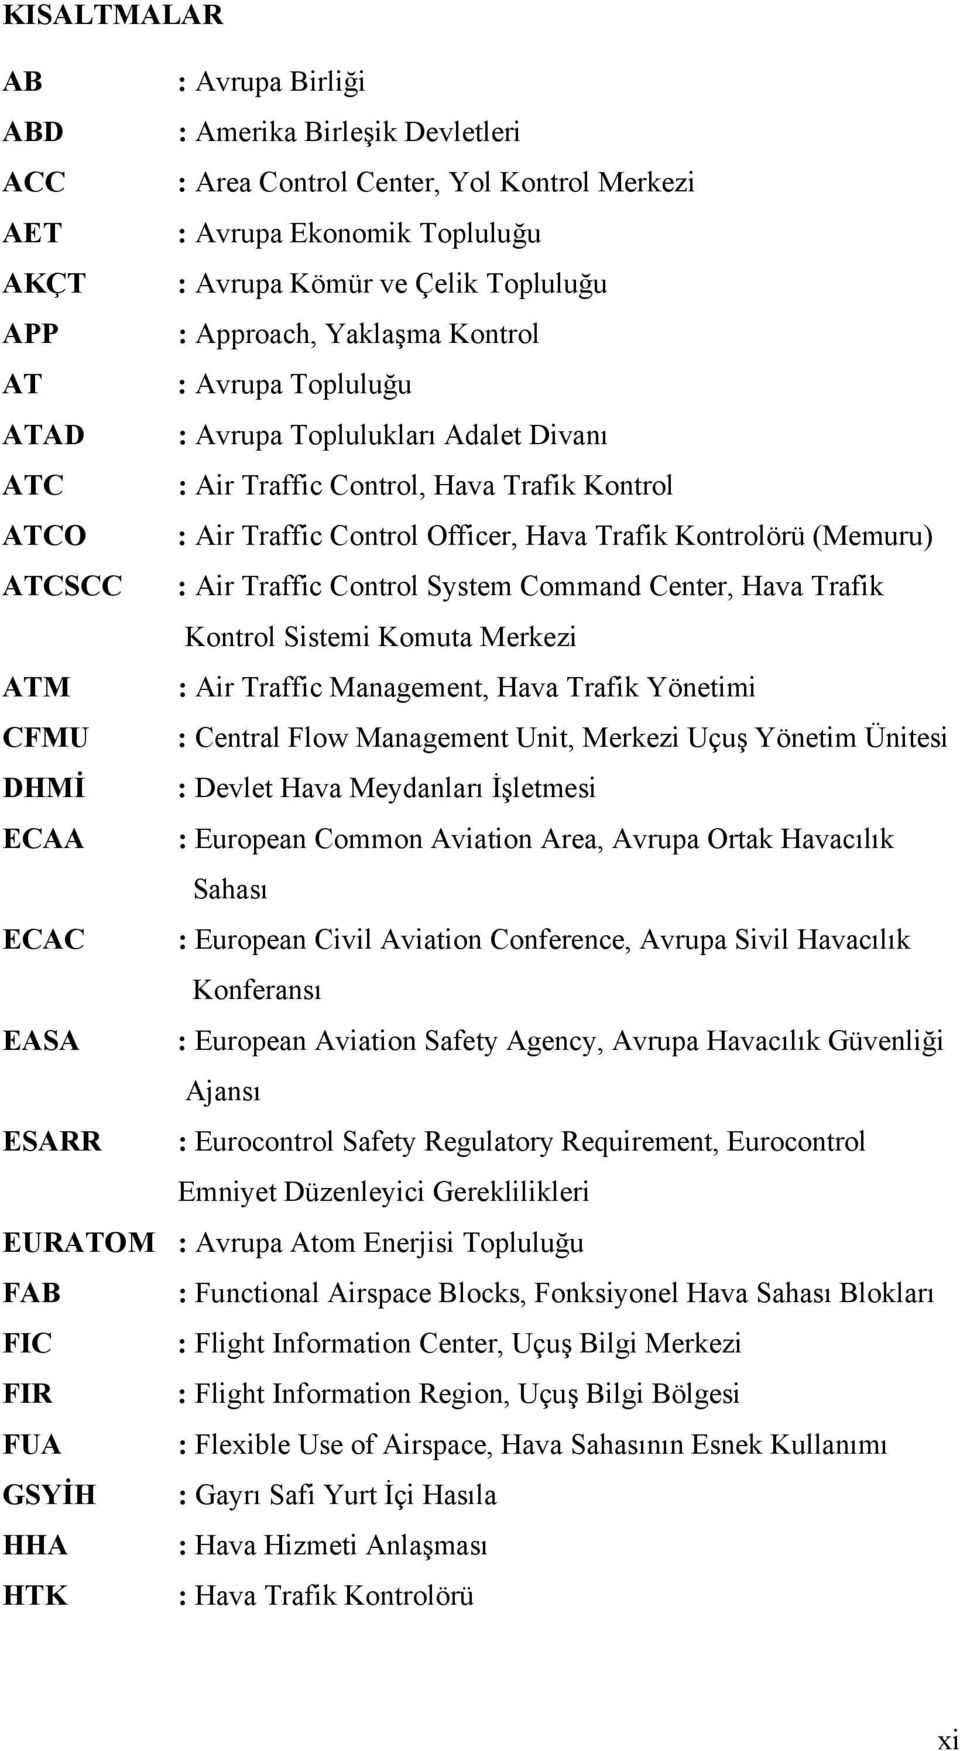 ATCSCC : Air Traffic Control System Command Center, Hava Trafik Kontrol Sistemi Komuta Merkezi ATM : Air Traffic Management, Hava Trafik Yönetimi CFMU : Central Flow Management Unit, Merkezi Uçuş